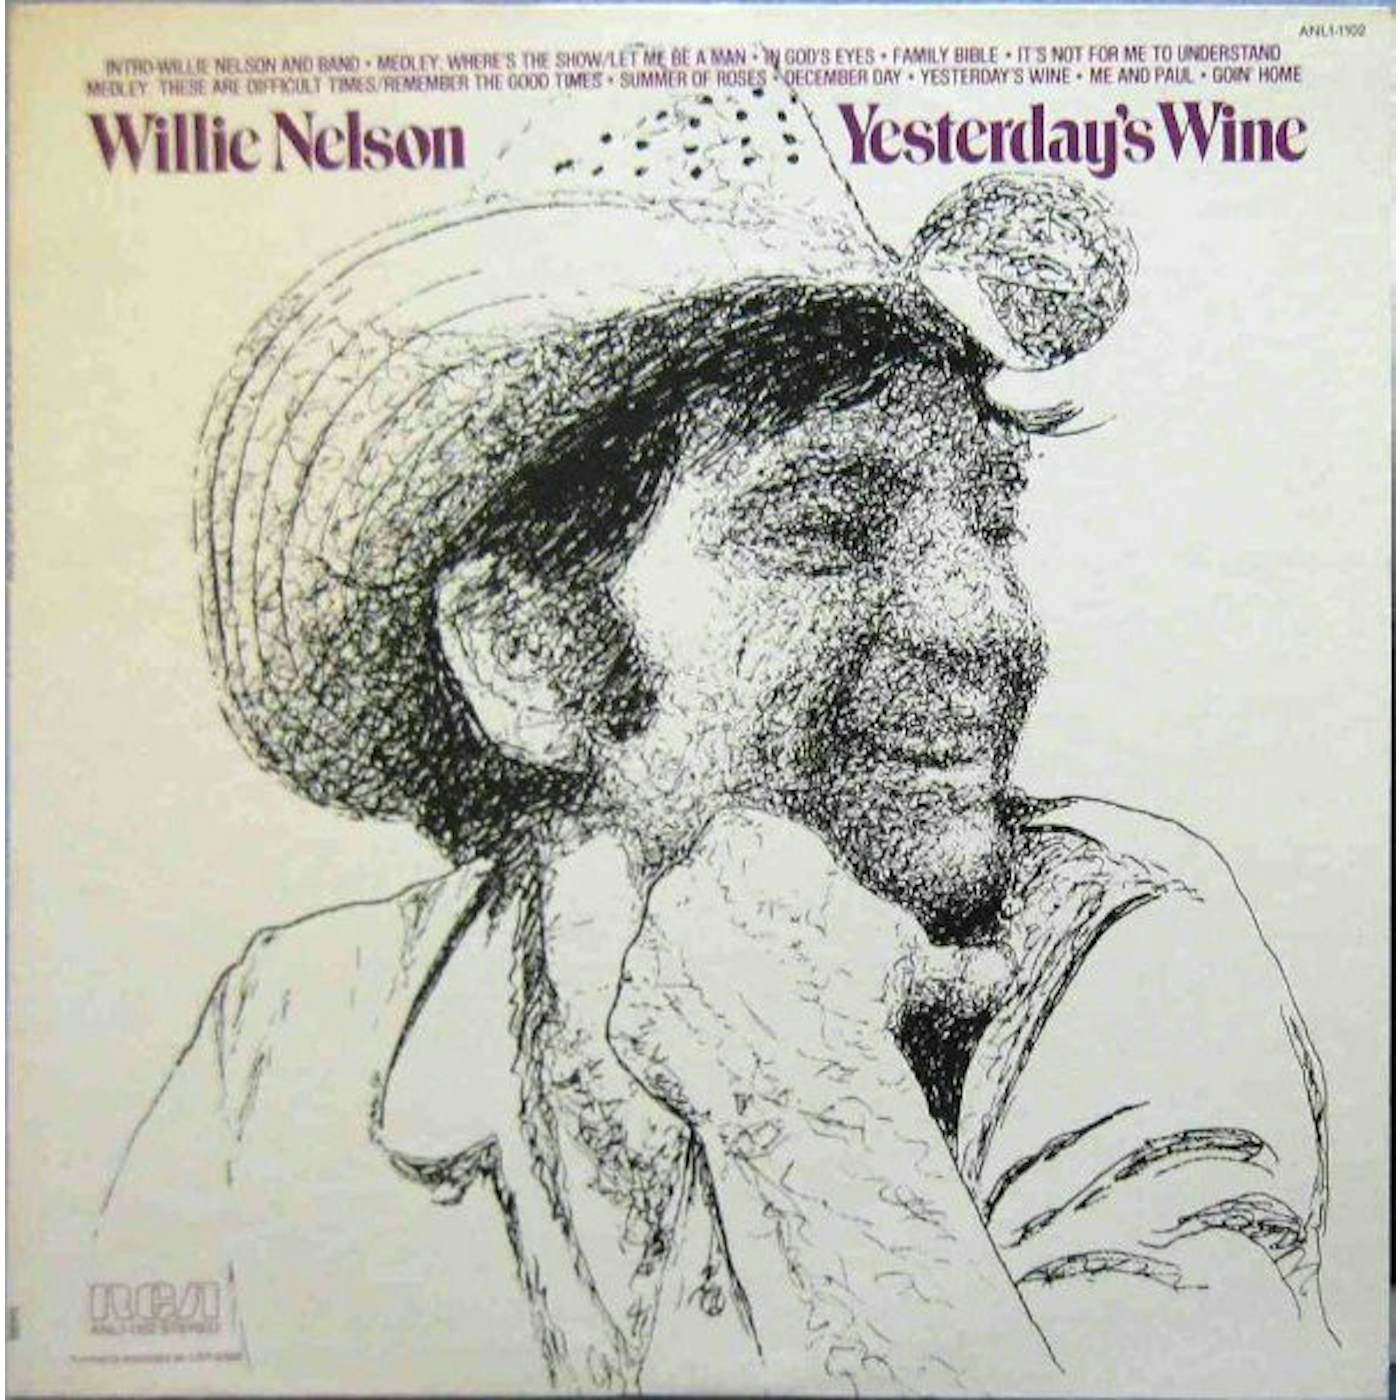 Willie Nelson YESTERDAY'S WINE CD